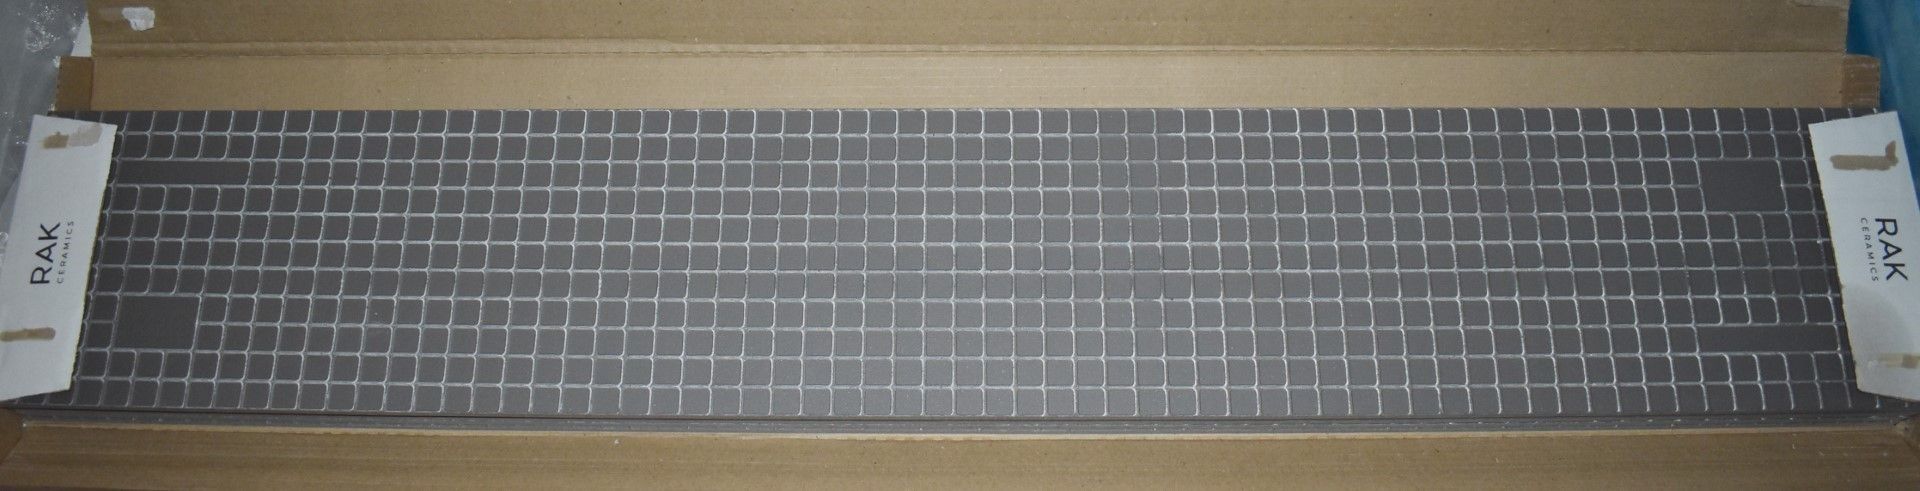 7 x Boxes of RAK Porcelain Floor or Wall Tiles - M Project Wood Design in Dark Grey - 19.5 x 120 cm - Image 9 of 11